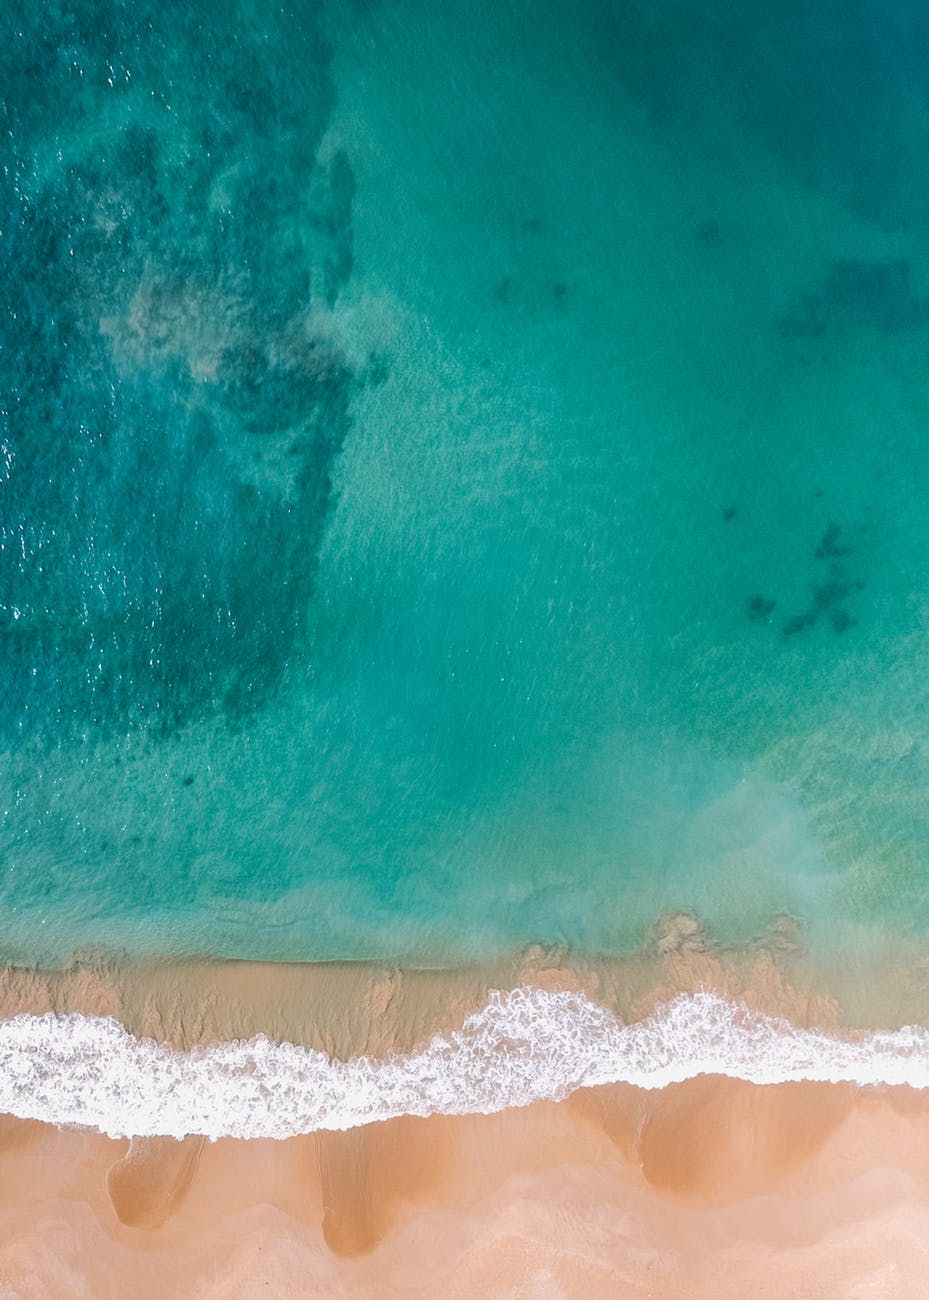 Stock image aerial shot beach blue water ocean gold sand